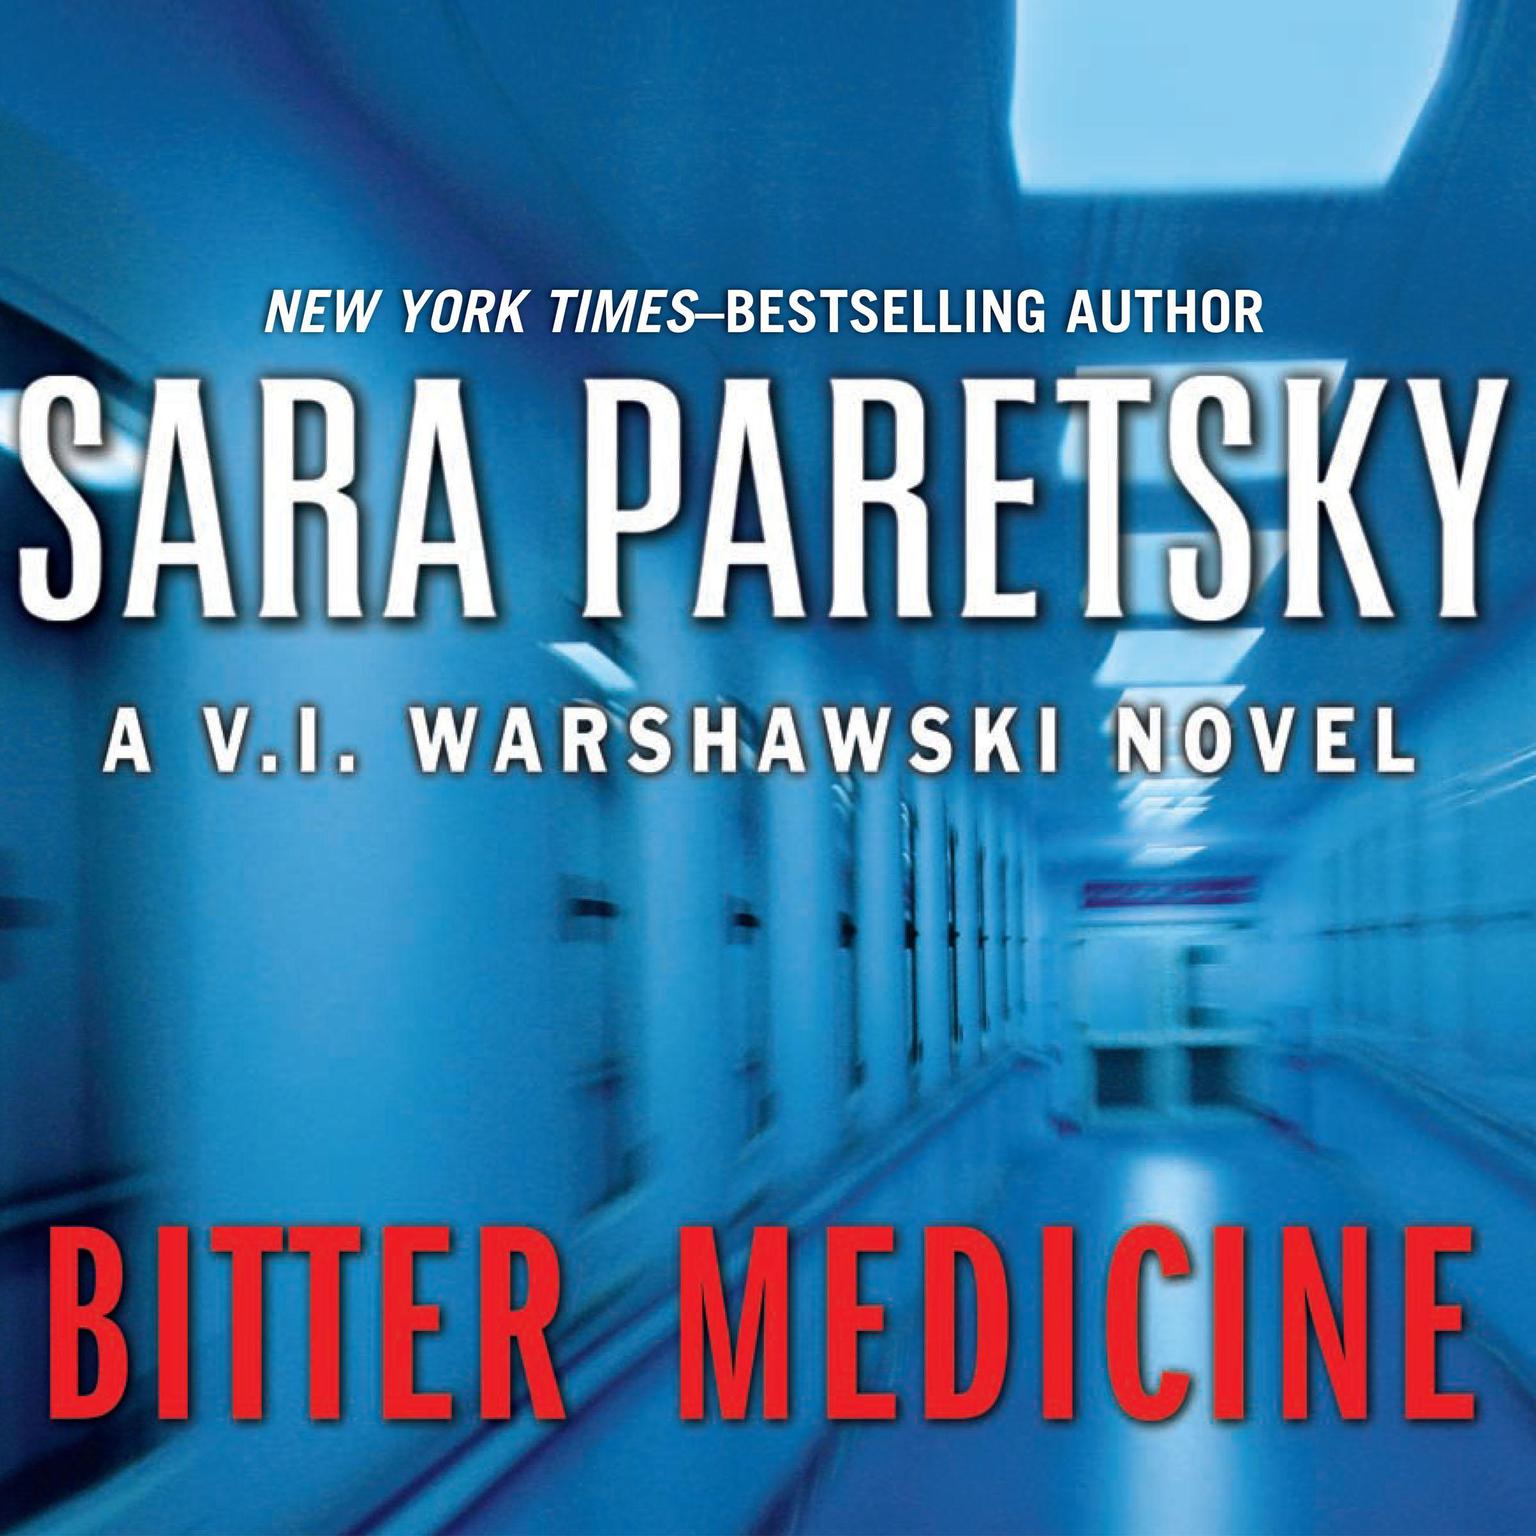 Bitter Medicine Audiobook, by Sara Paretsky